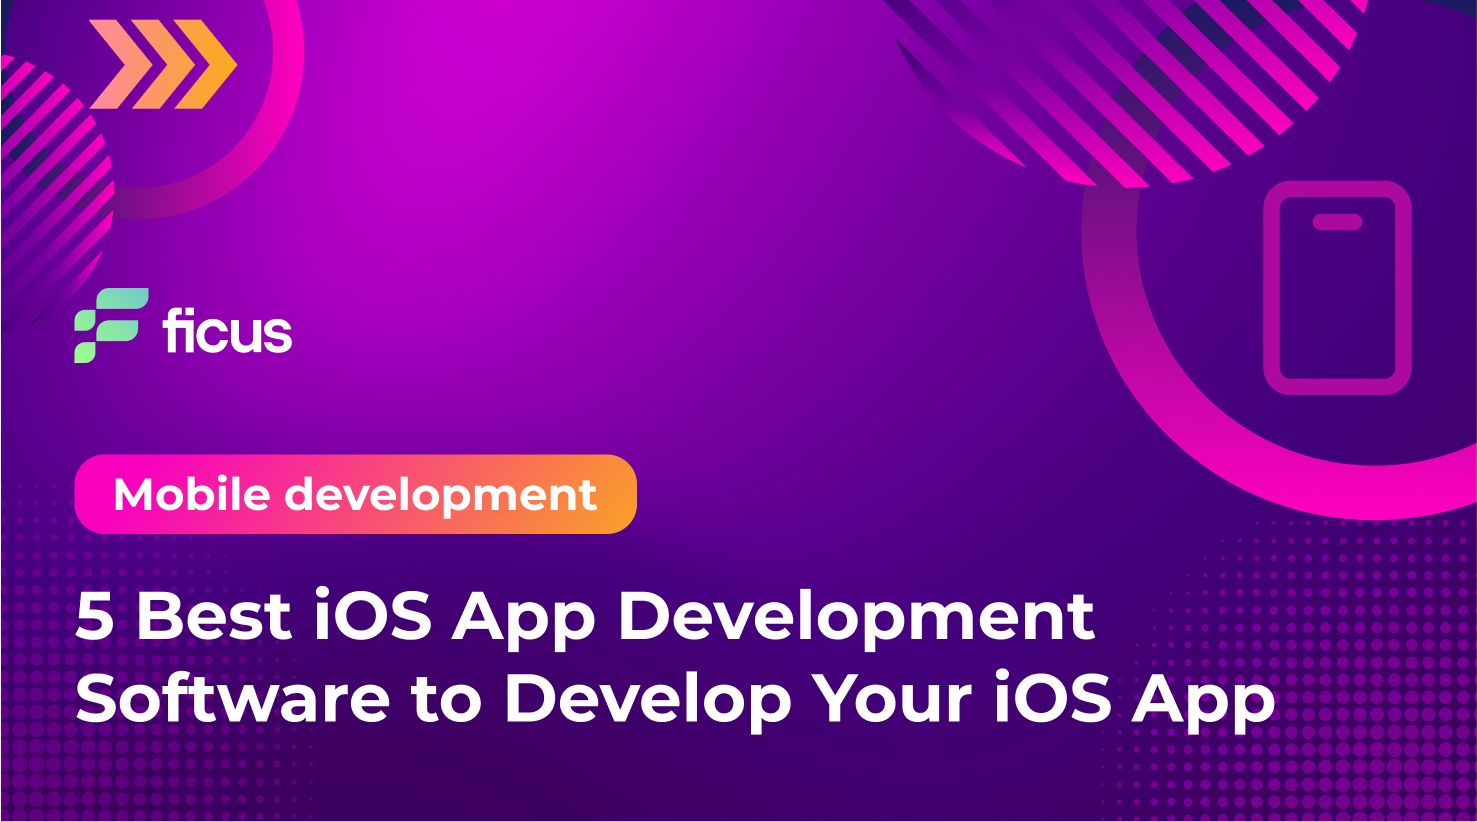 5 Best iOS App Development Software to Develop Your iOS App